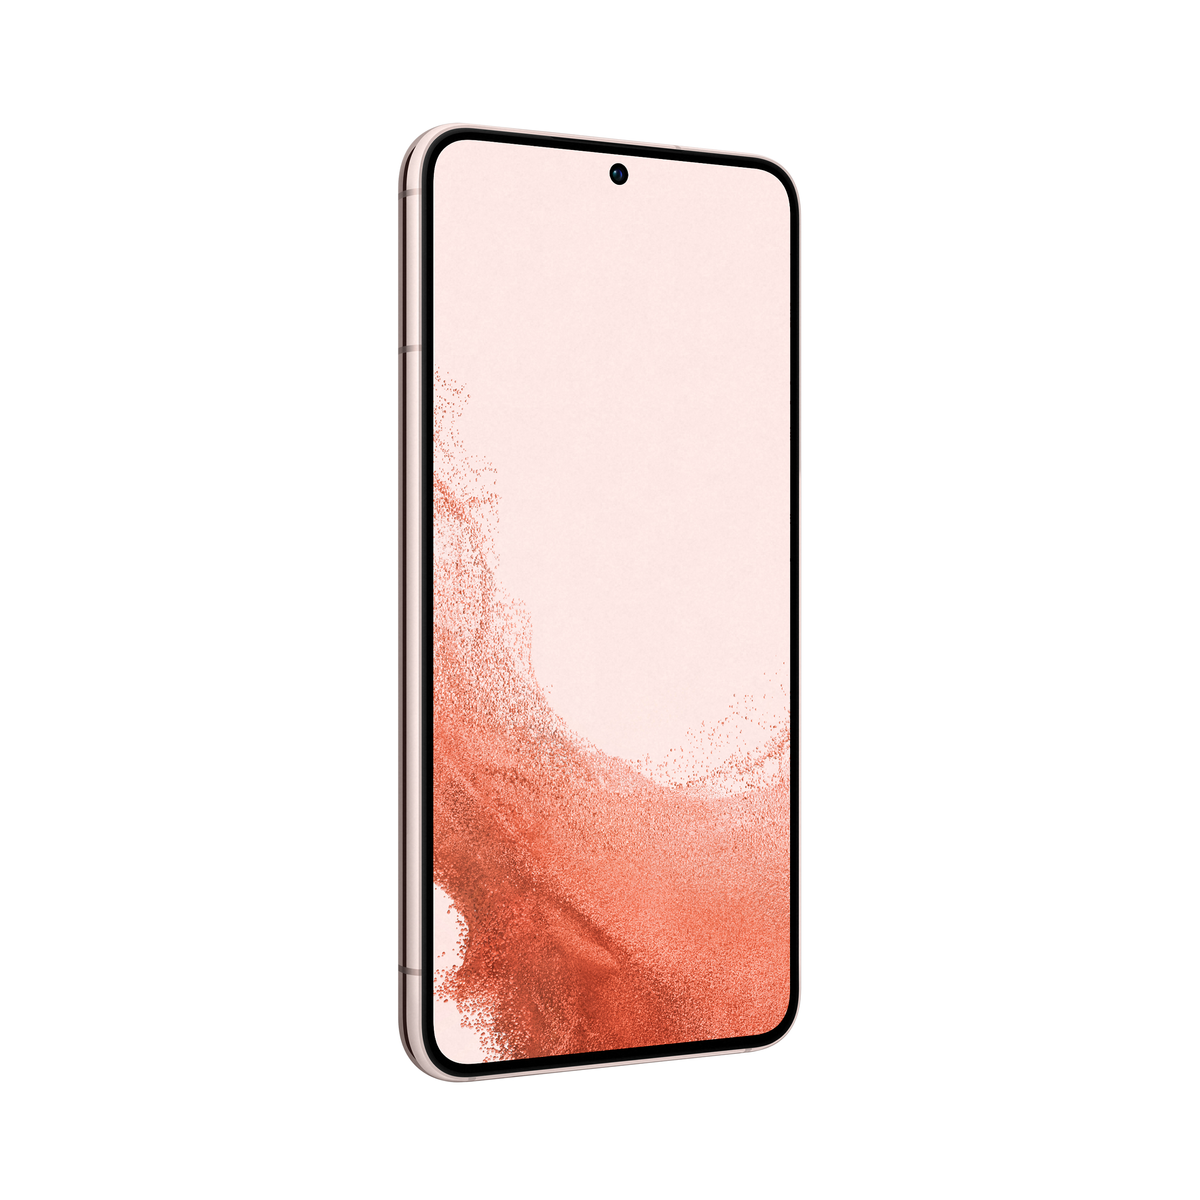 128 SAMSUNG 5G 128GB S22 pink pink Galaxy SIM Dual GB gold